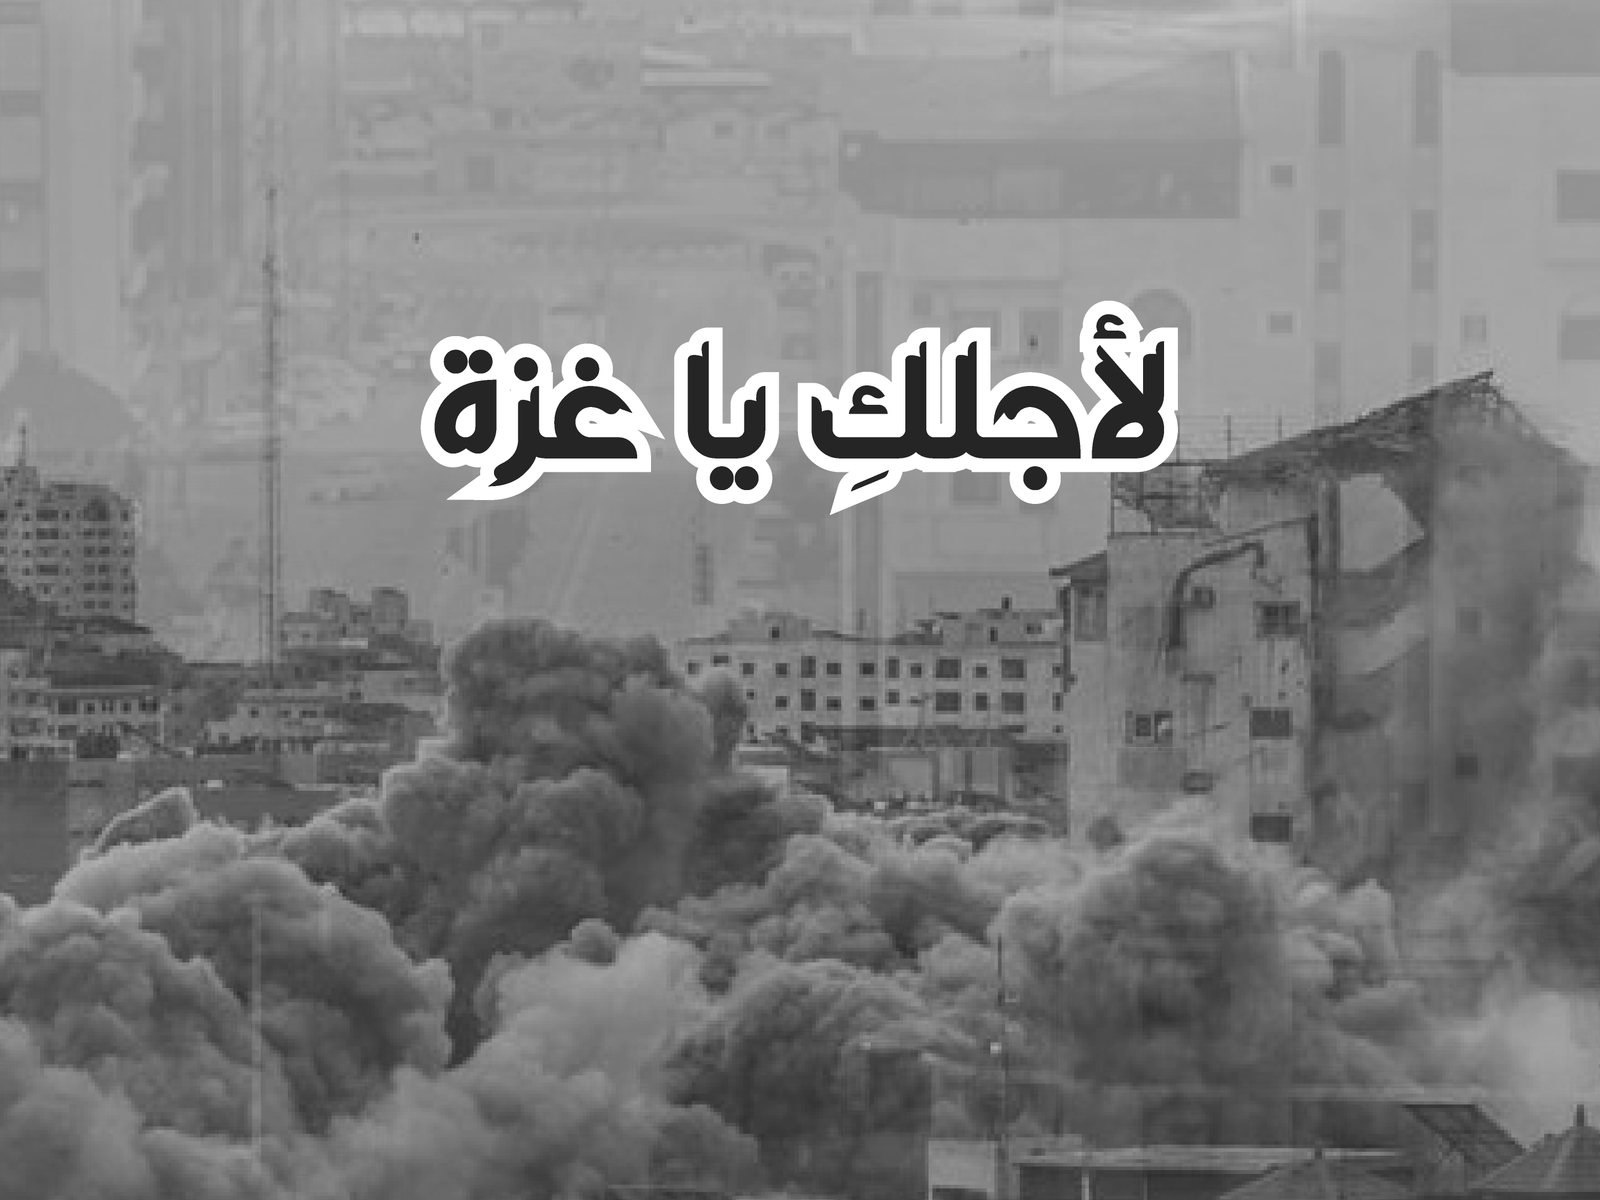 Gaza Campaign Arabic B&W